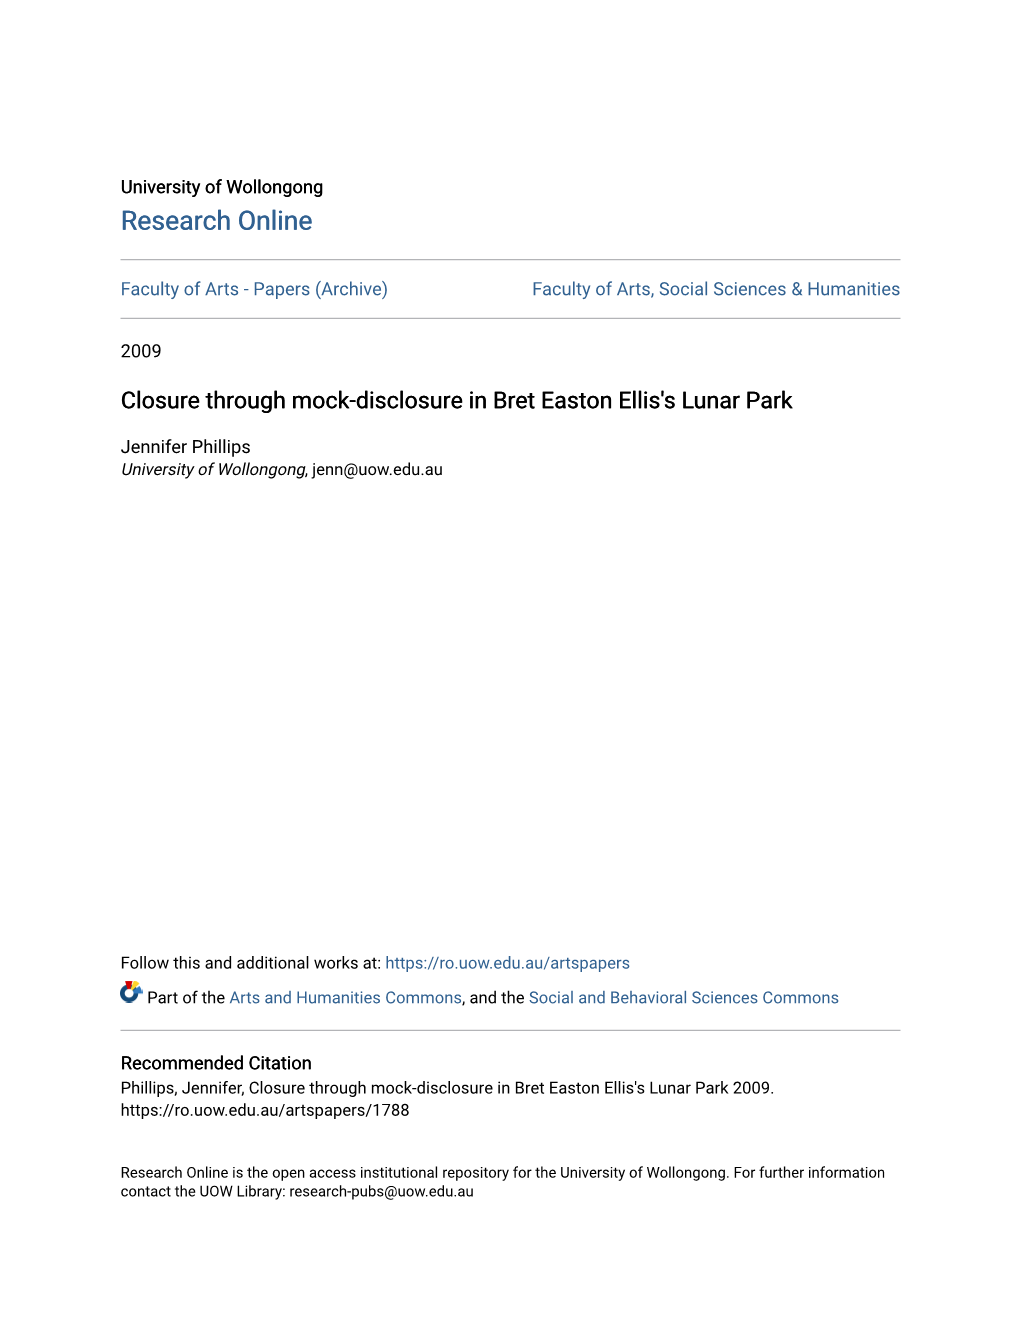 Closure Through Mock-Disclosure in Bret Easton Ellis's Lunar Park